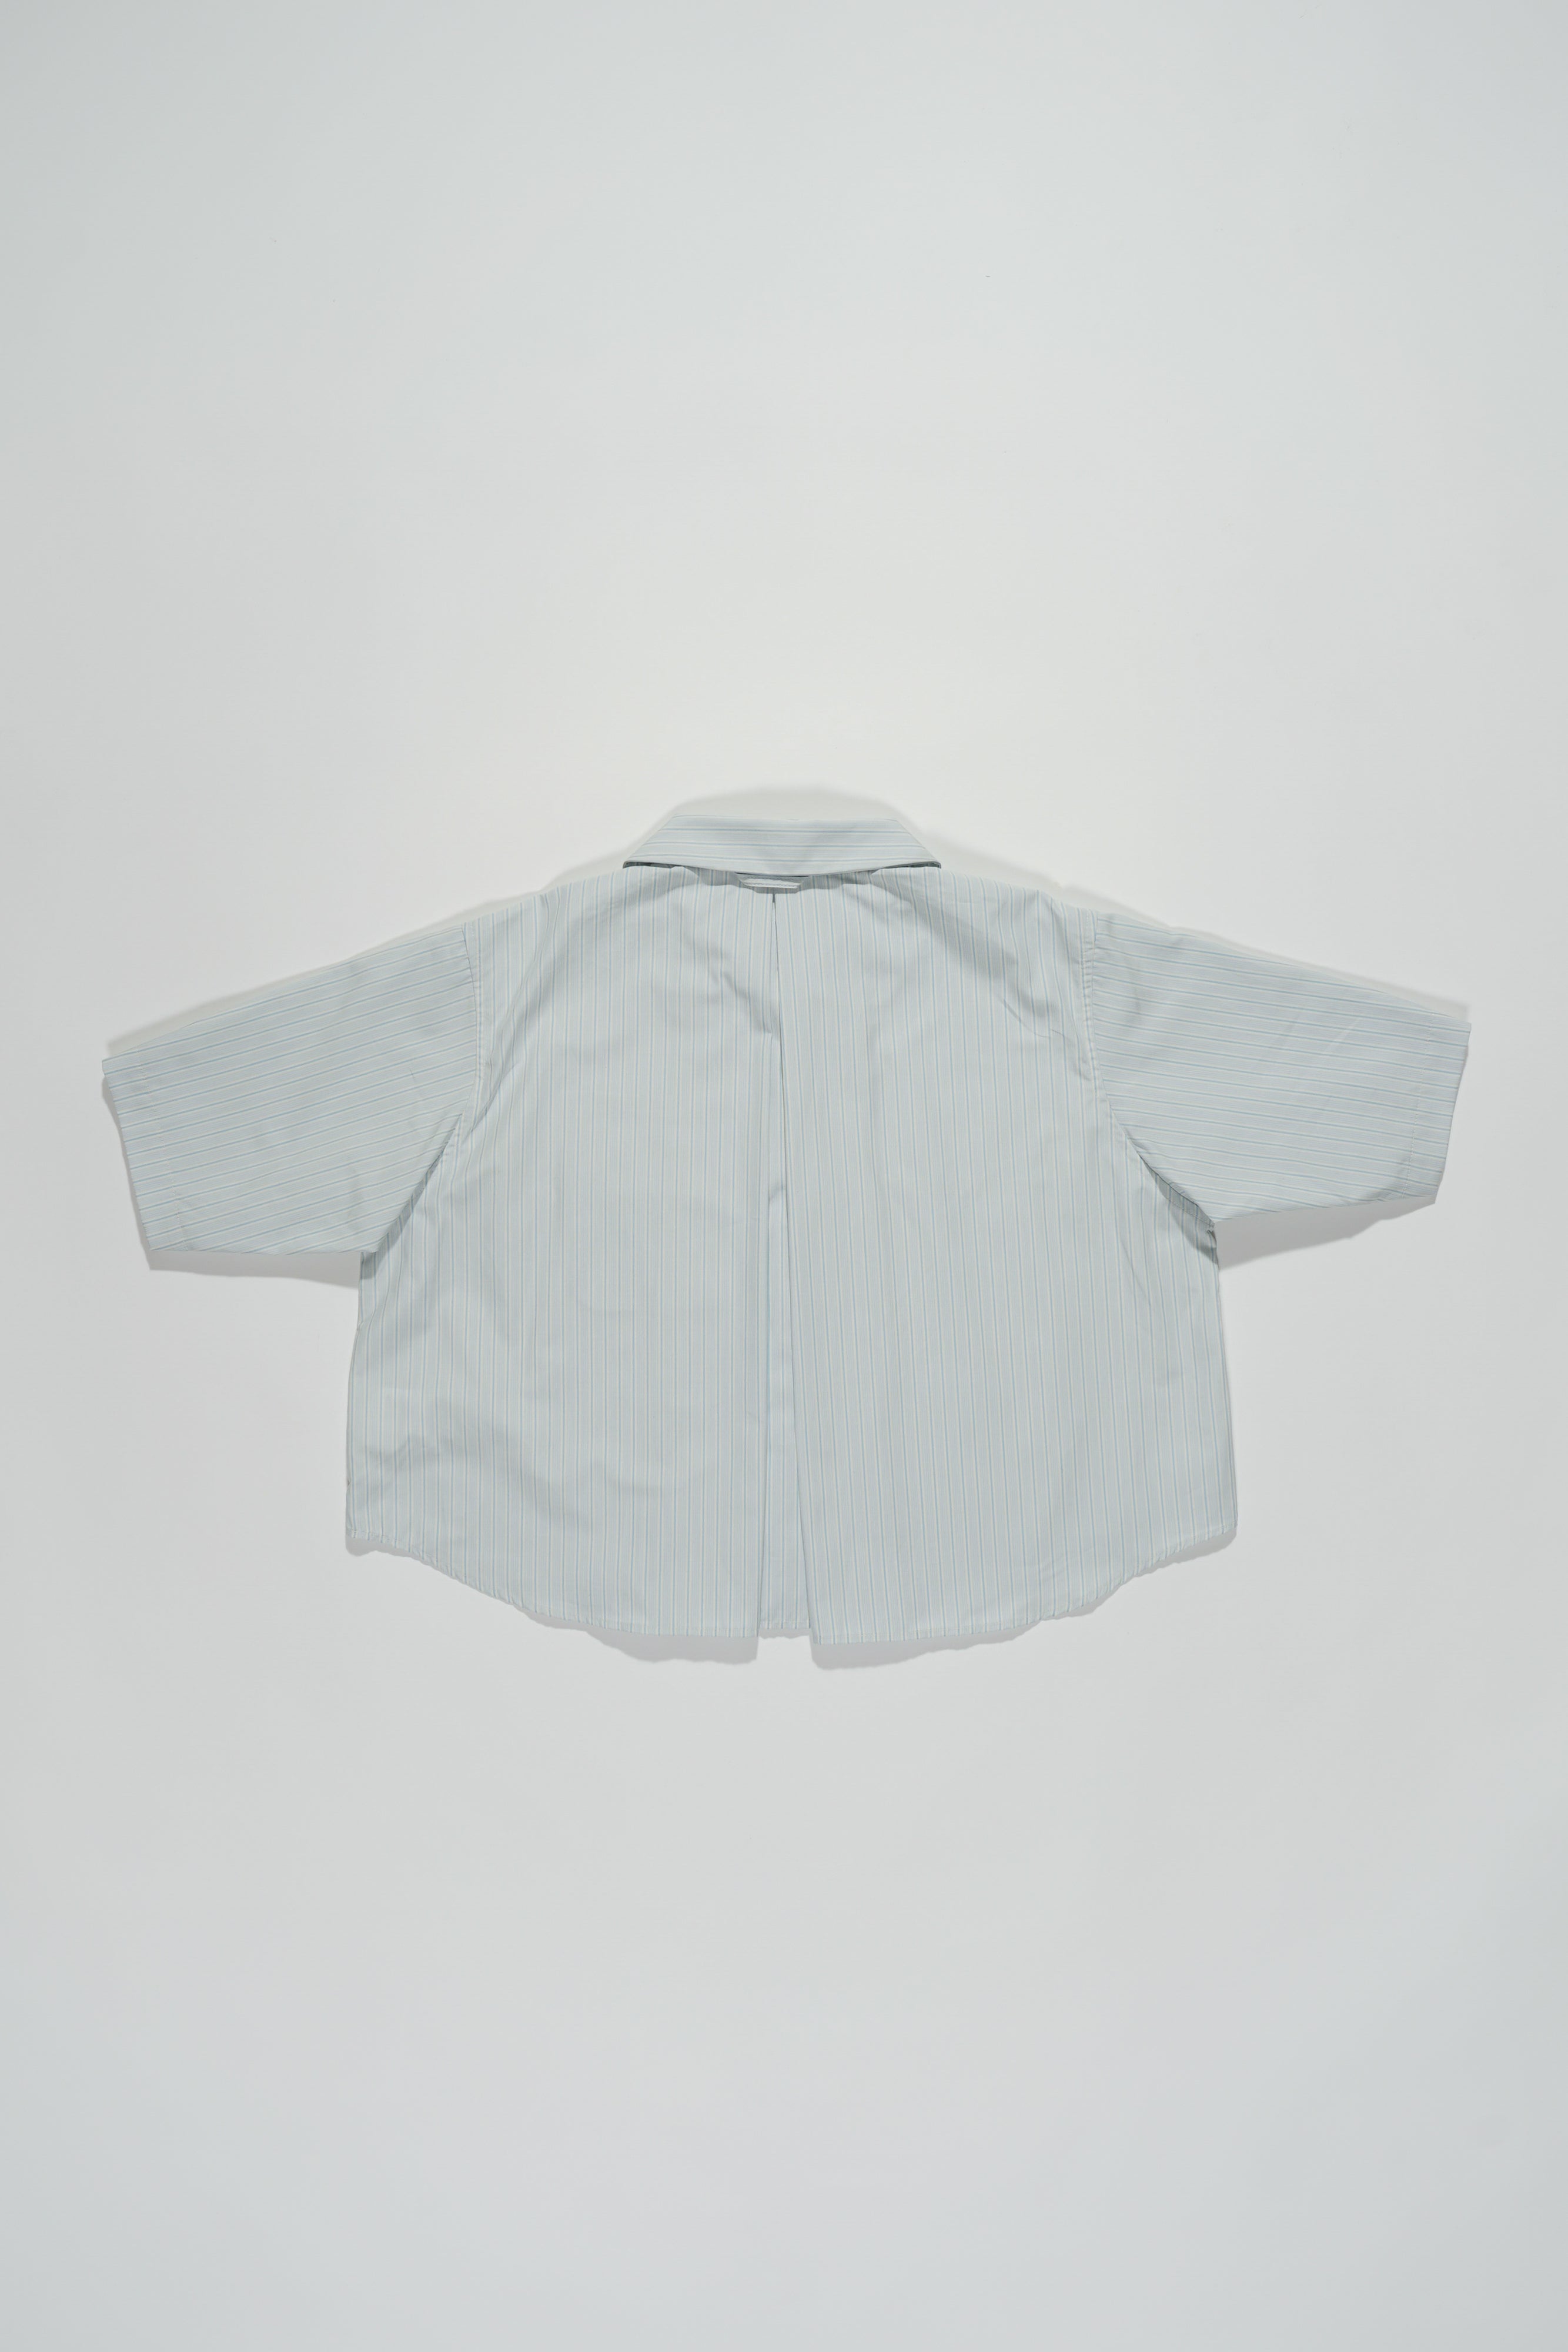 Engineered Garments Blank Label Crest Half Shirt - Lt Blue/Brown/Green Small Plaid